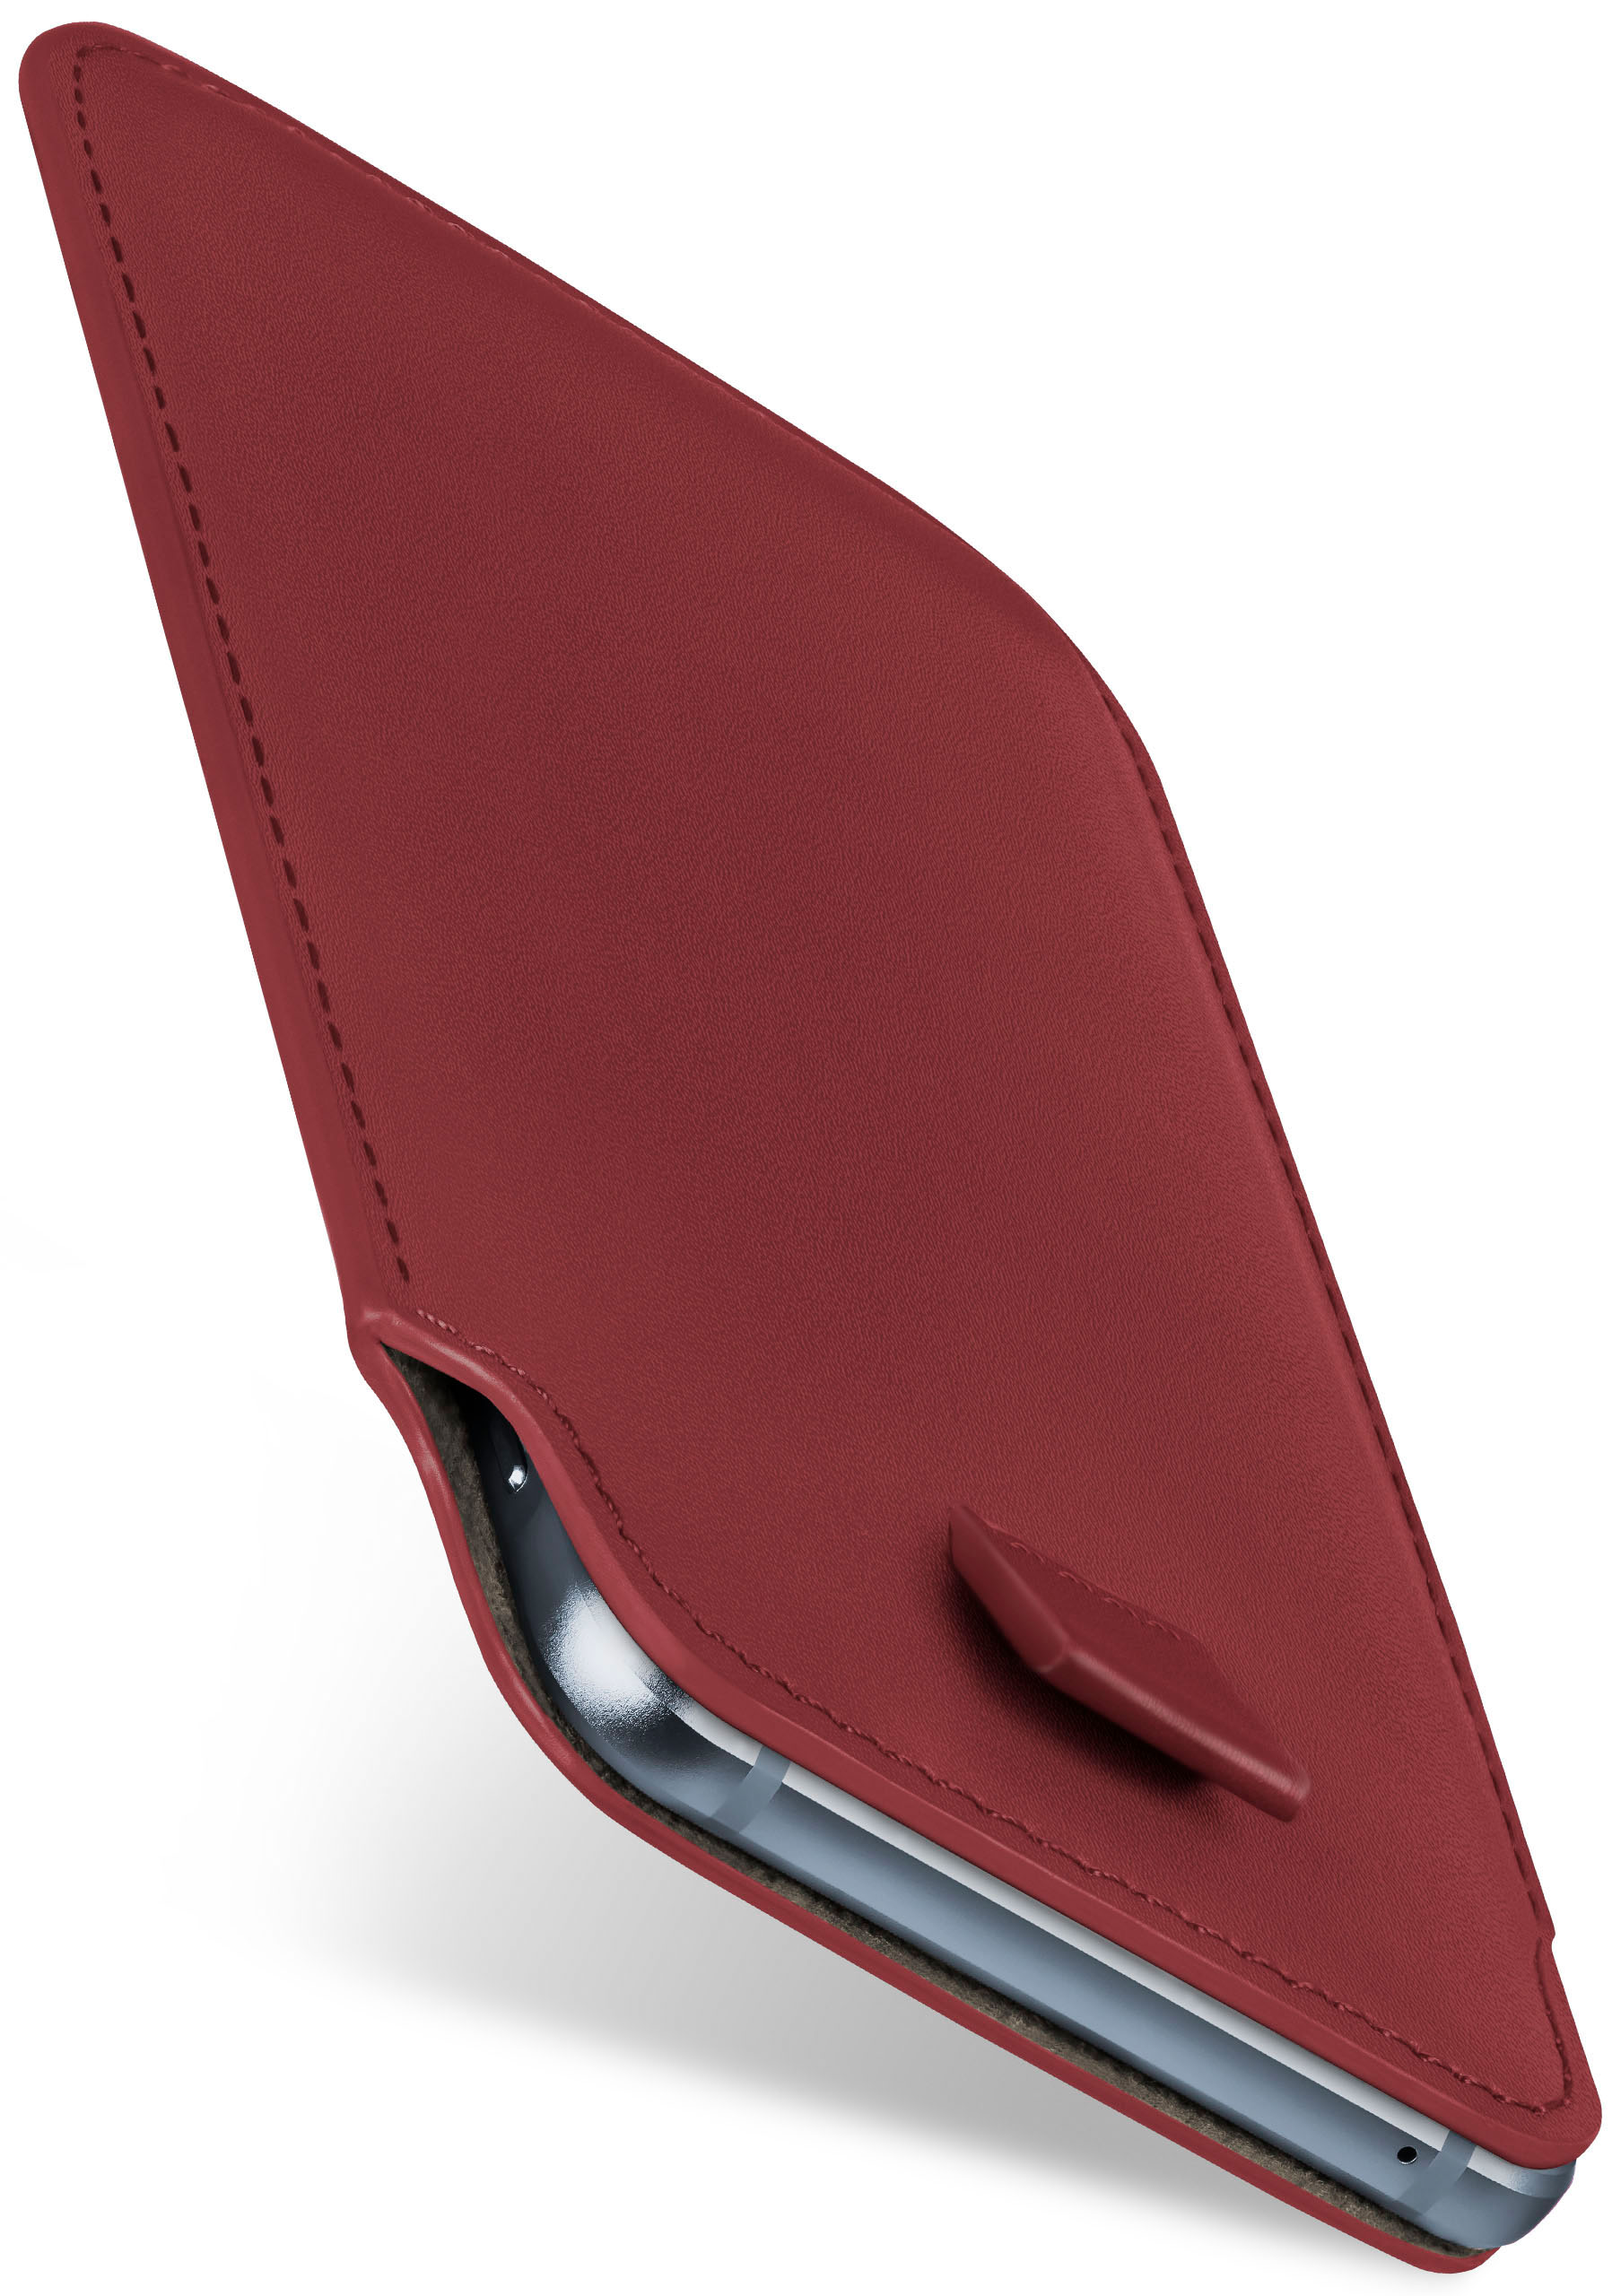 MOEX Slide Case, Lite Full 2015, P8 Cover, Huawei, Maroon-Red